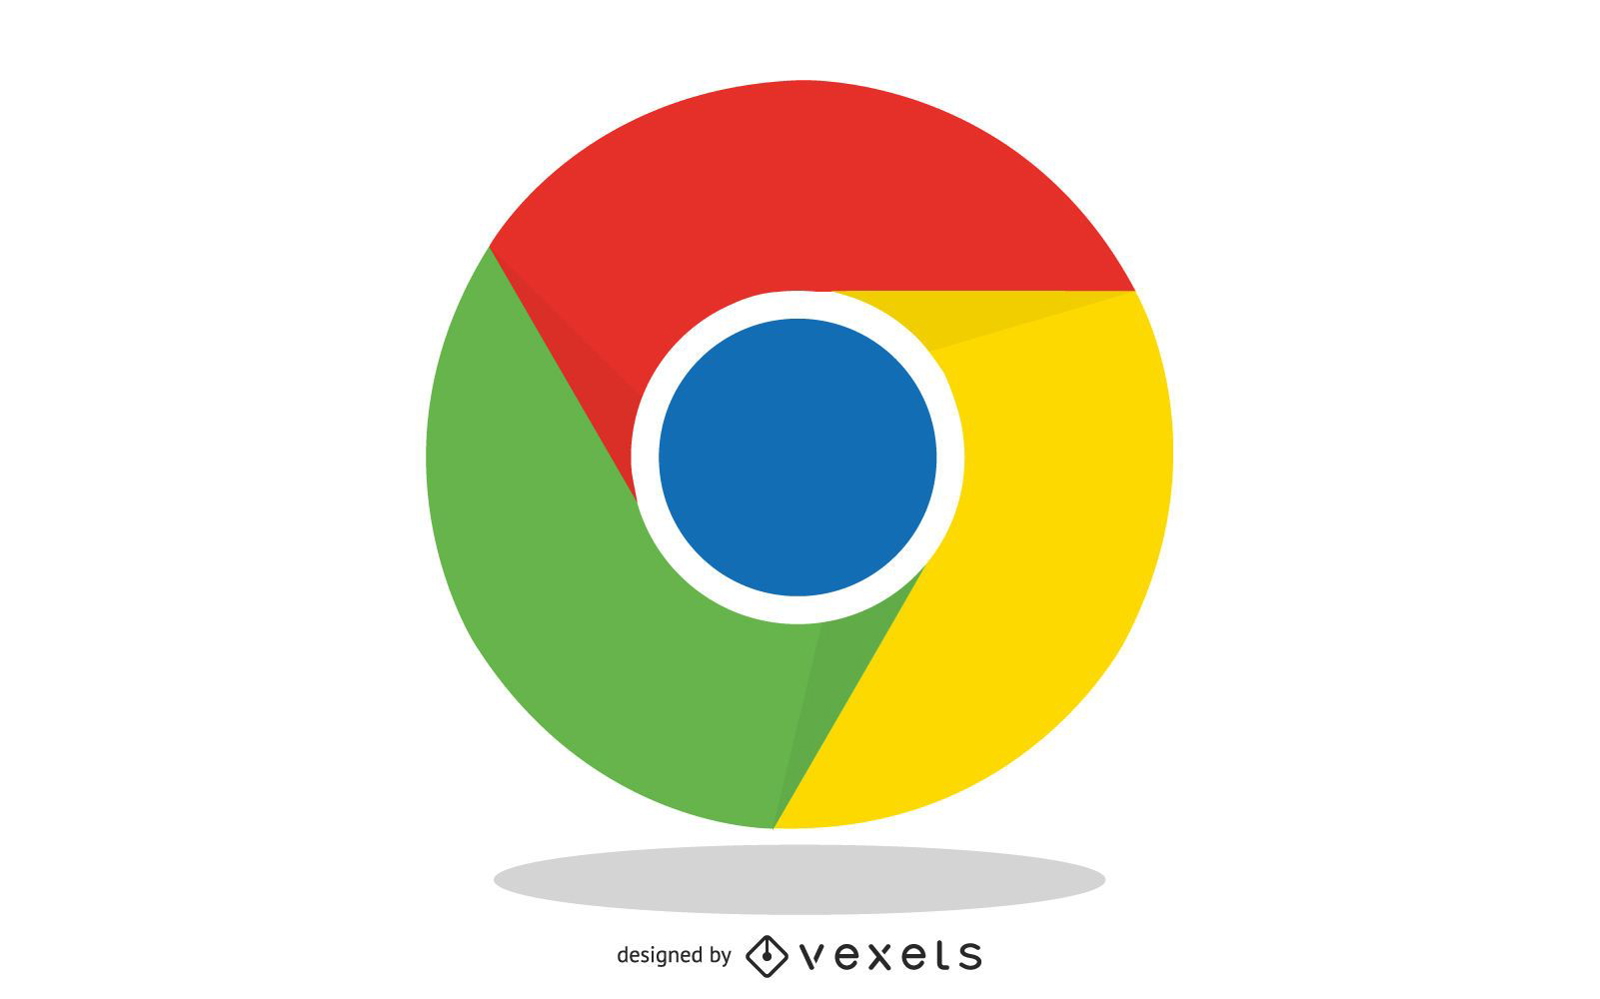 Google Logo - Free Vectors & PSDs to Download